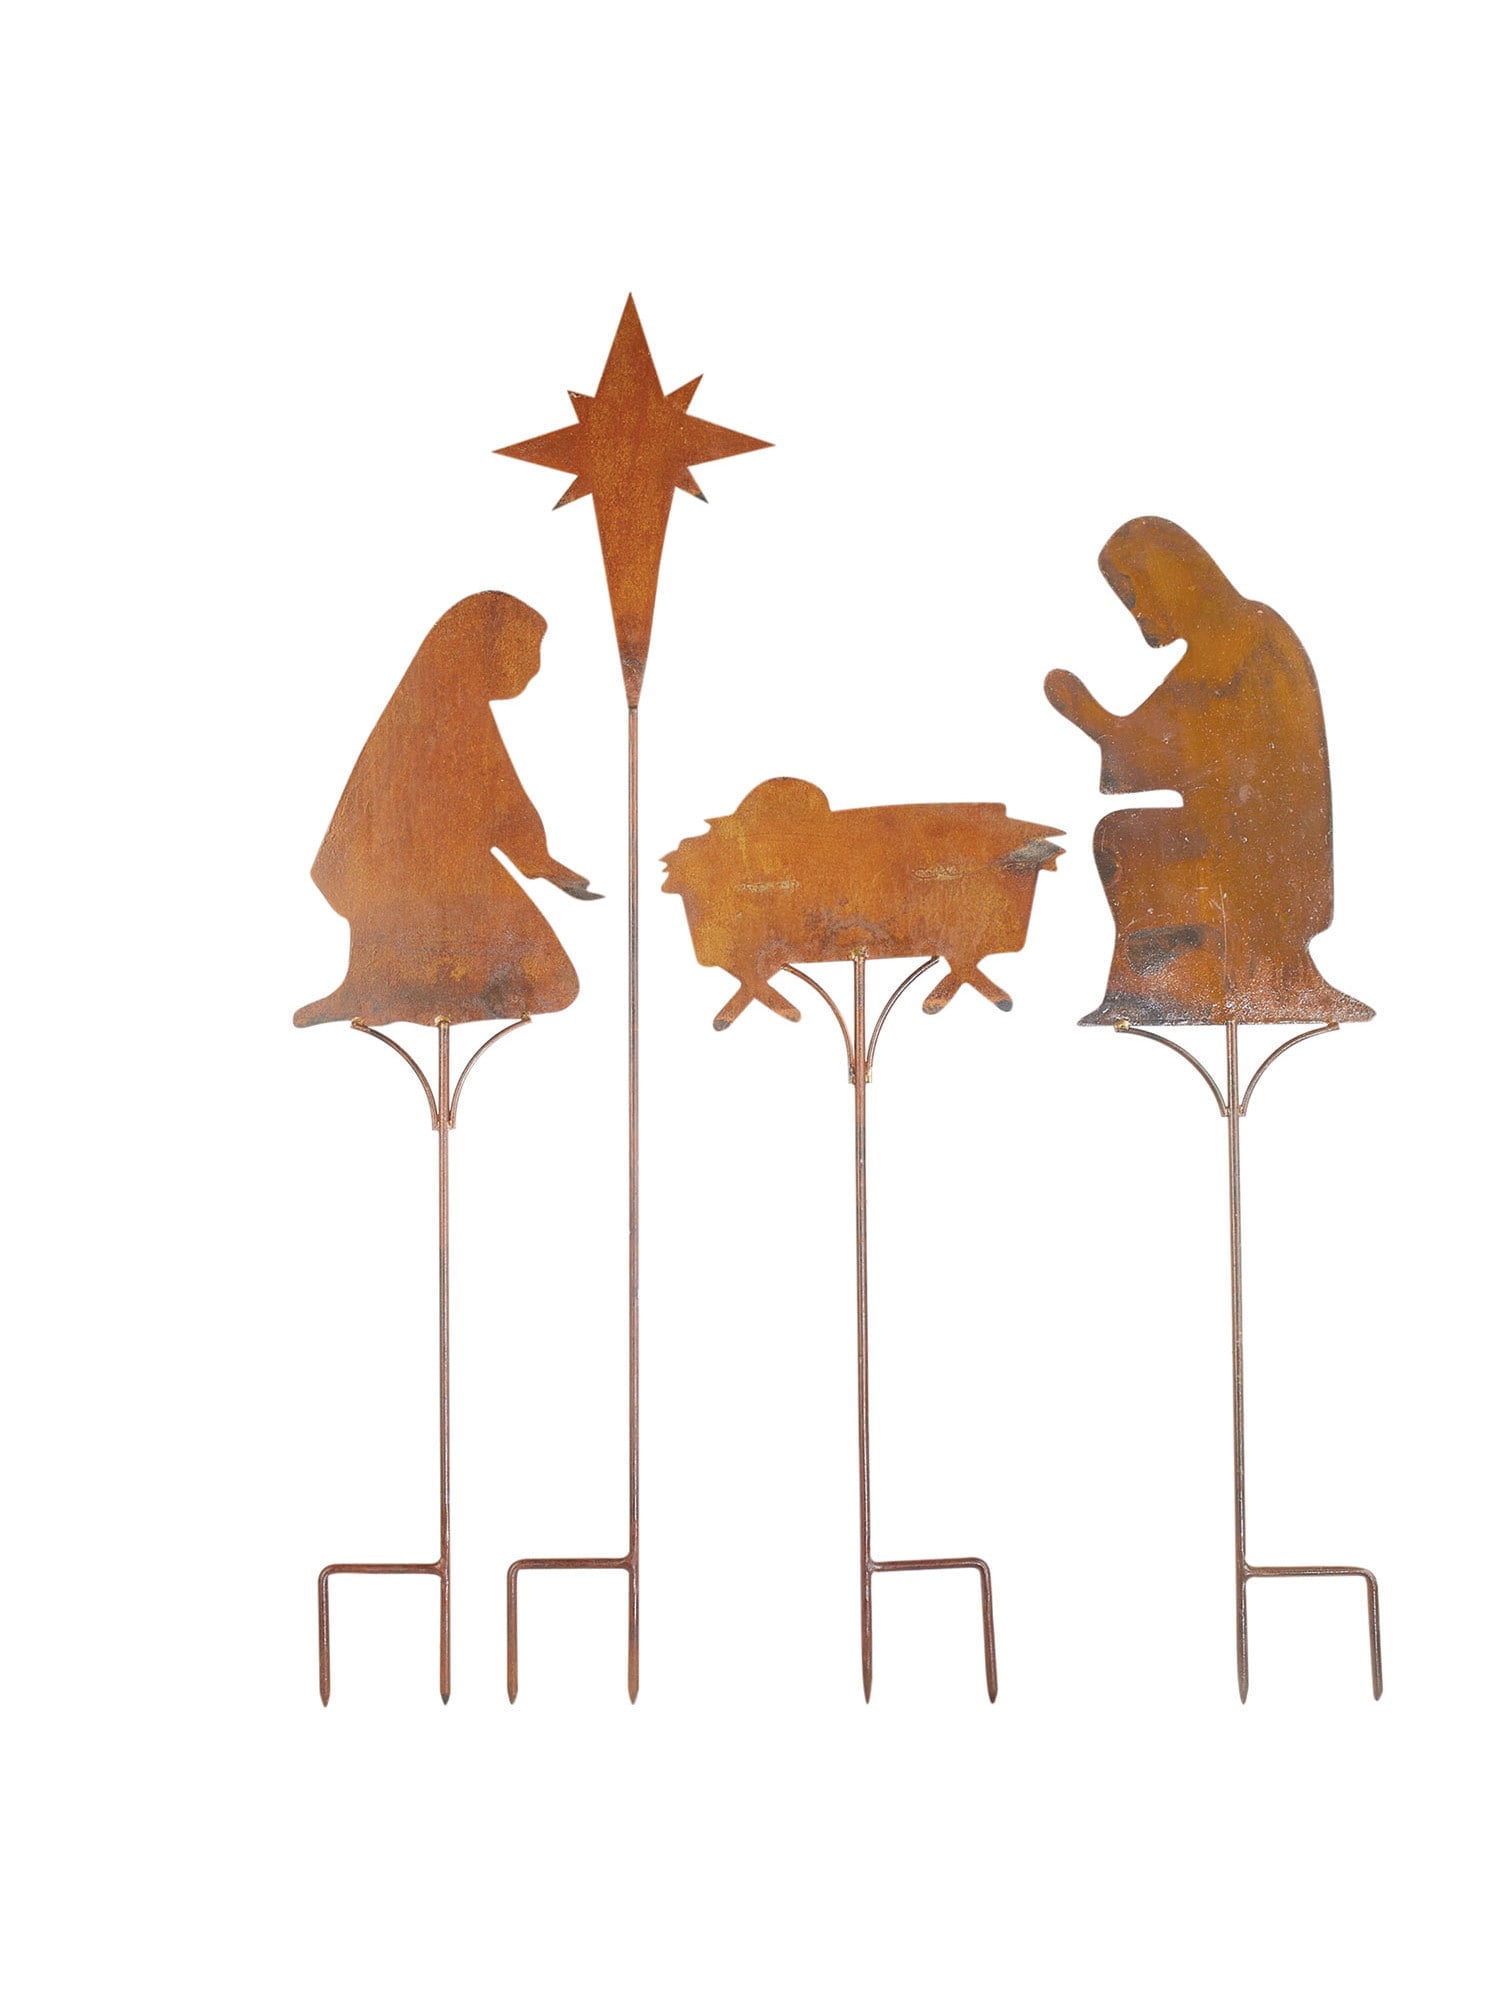 25% OFF Leisure Arts Nativity Christmas needlepoint holiday creche religious kit